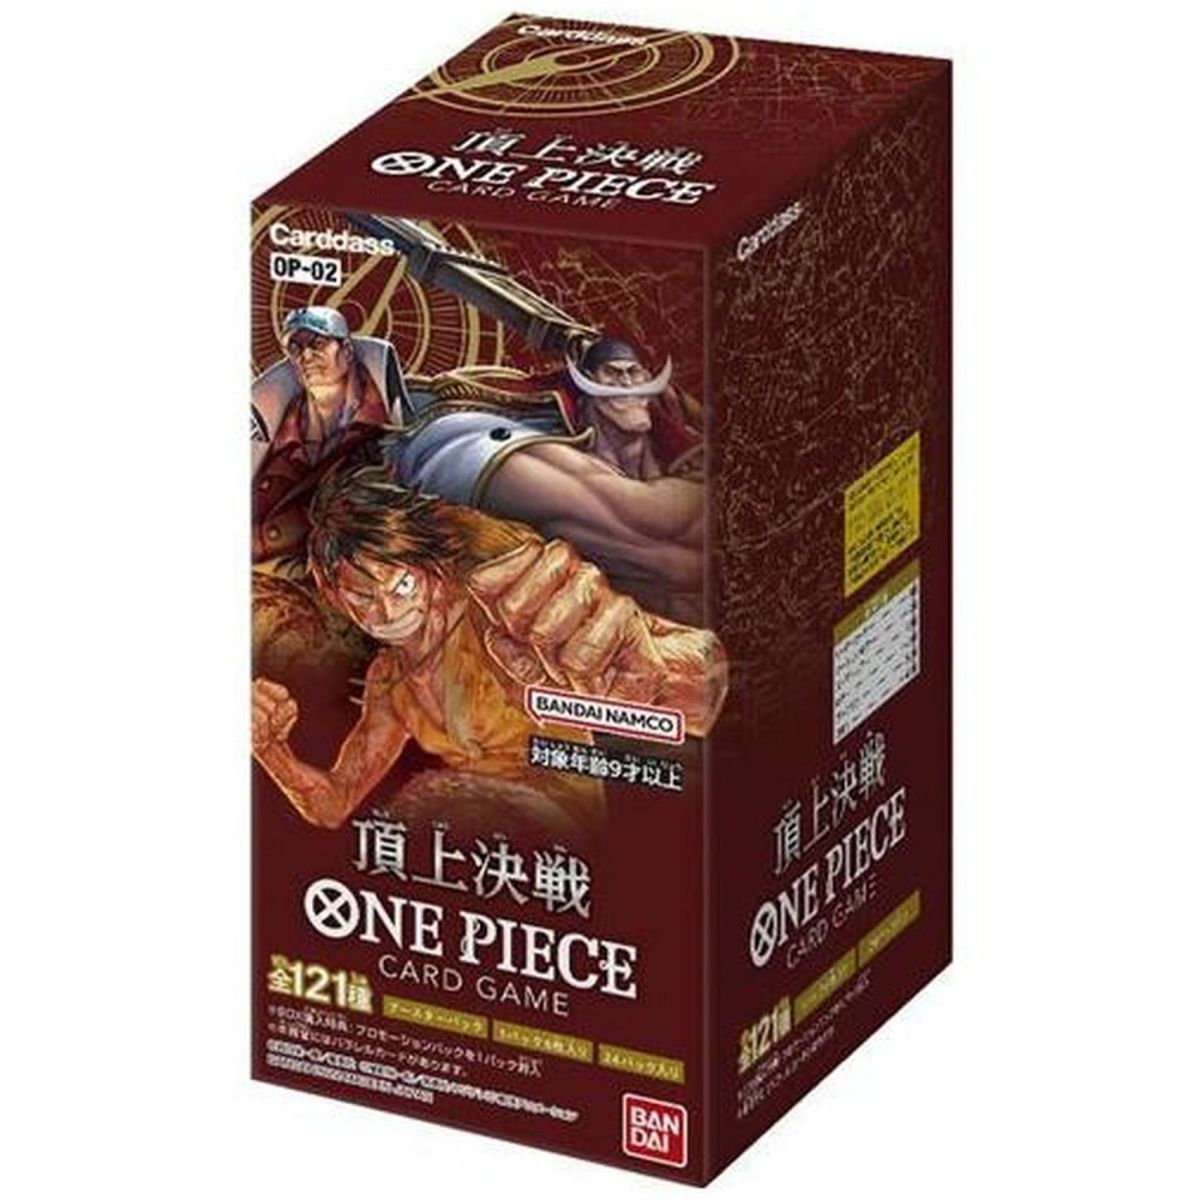 One Piece CG - Display - Box of 24 Boosters - Paramount War - OP-02 - JP